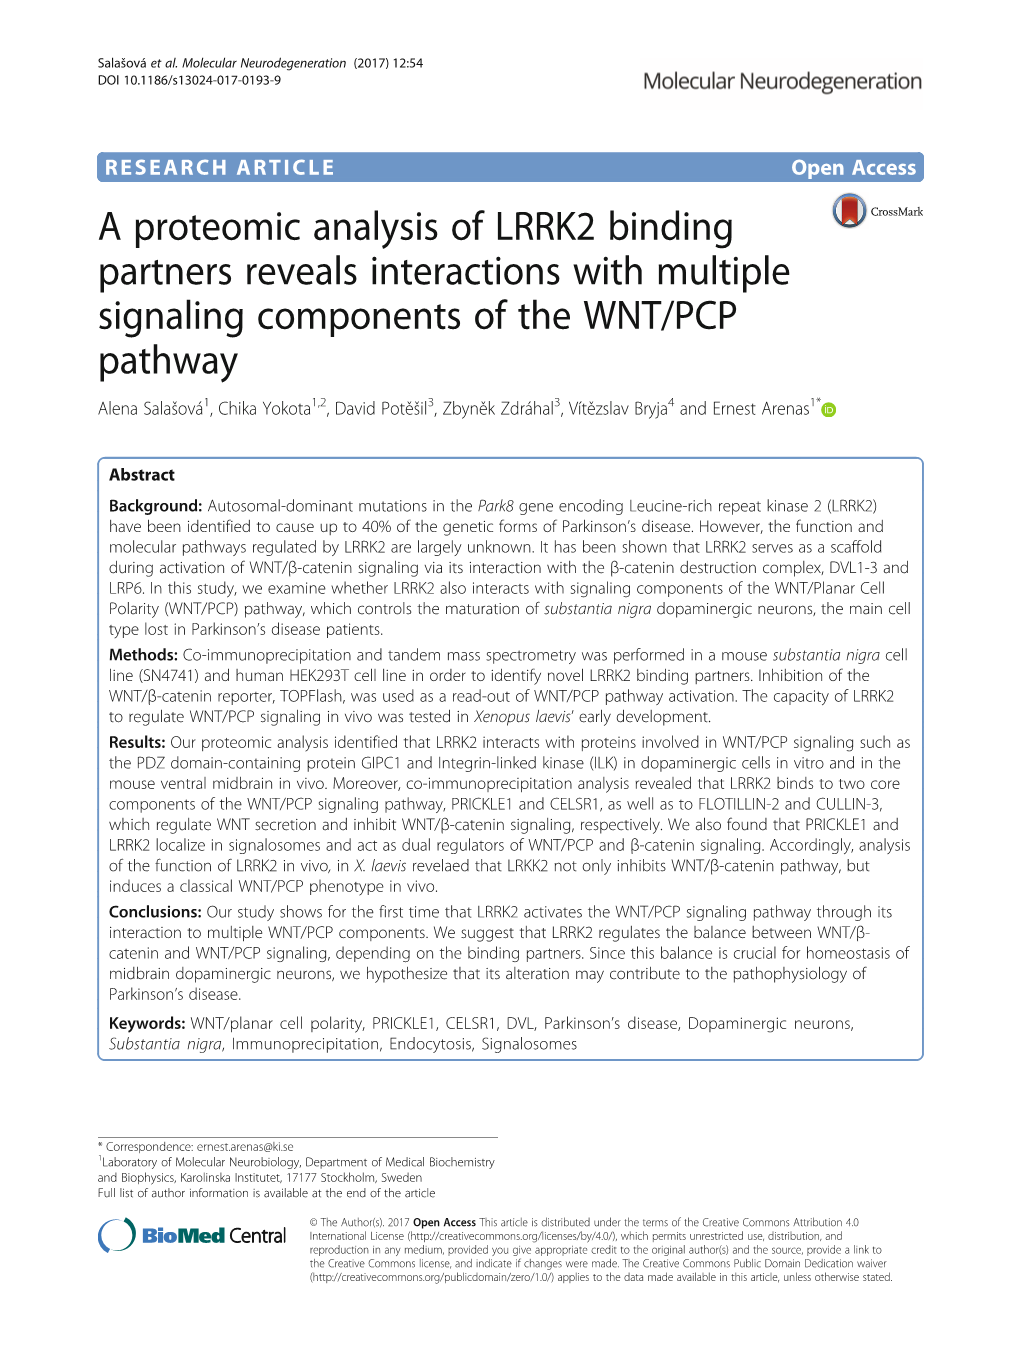 A Proteomic Analysis of LRRK2 Binding Partners Reveals